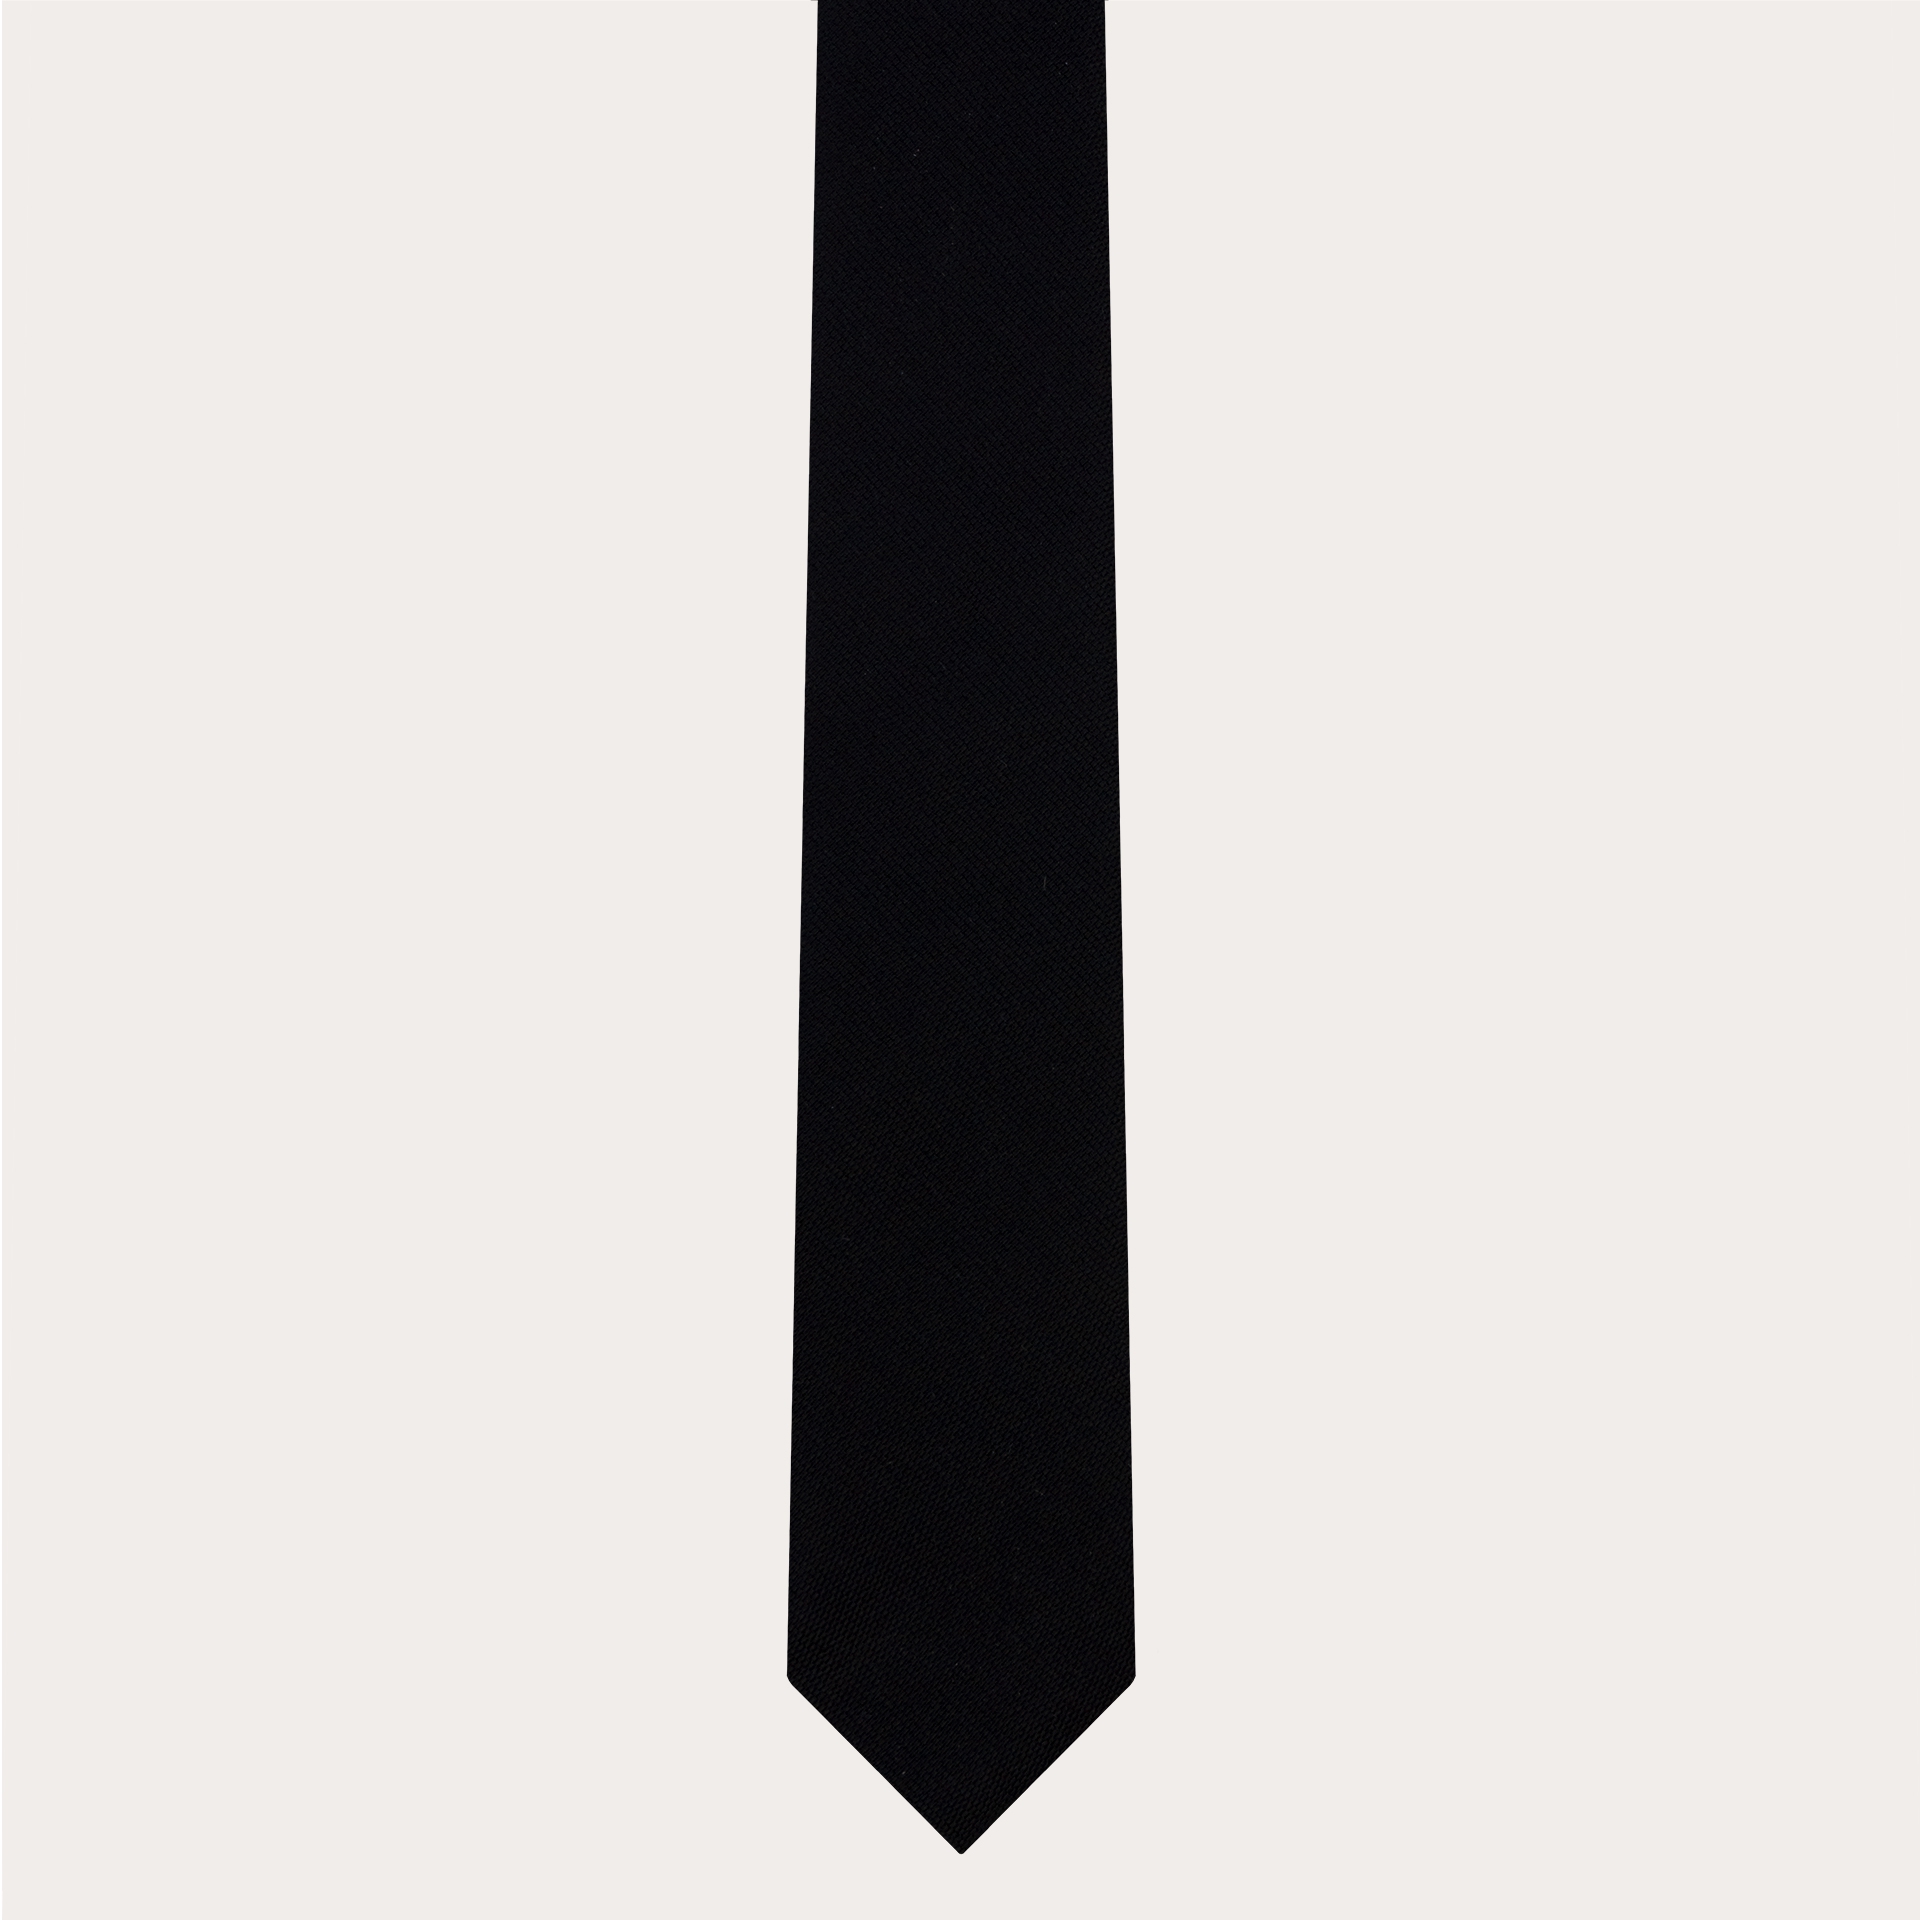 Corbata fina clásica en pura seda, negra